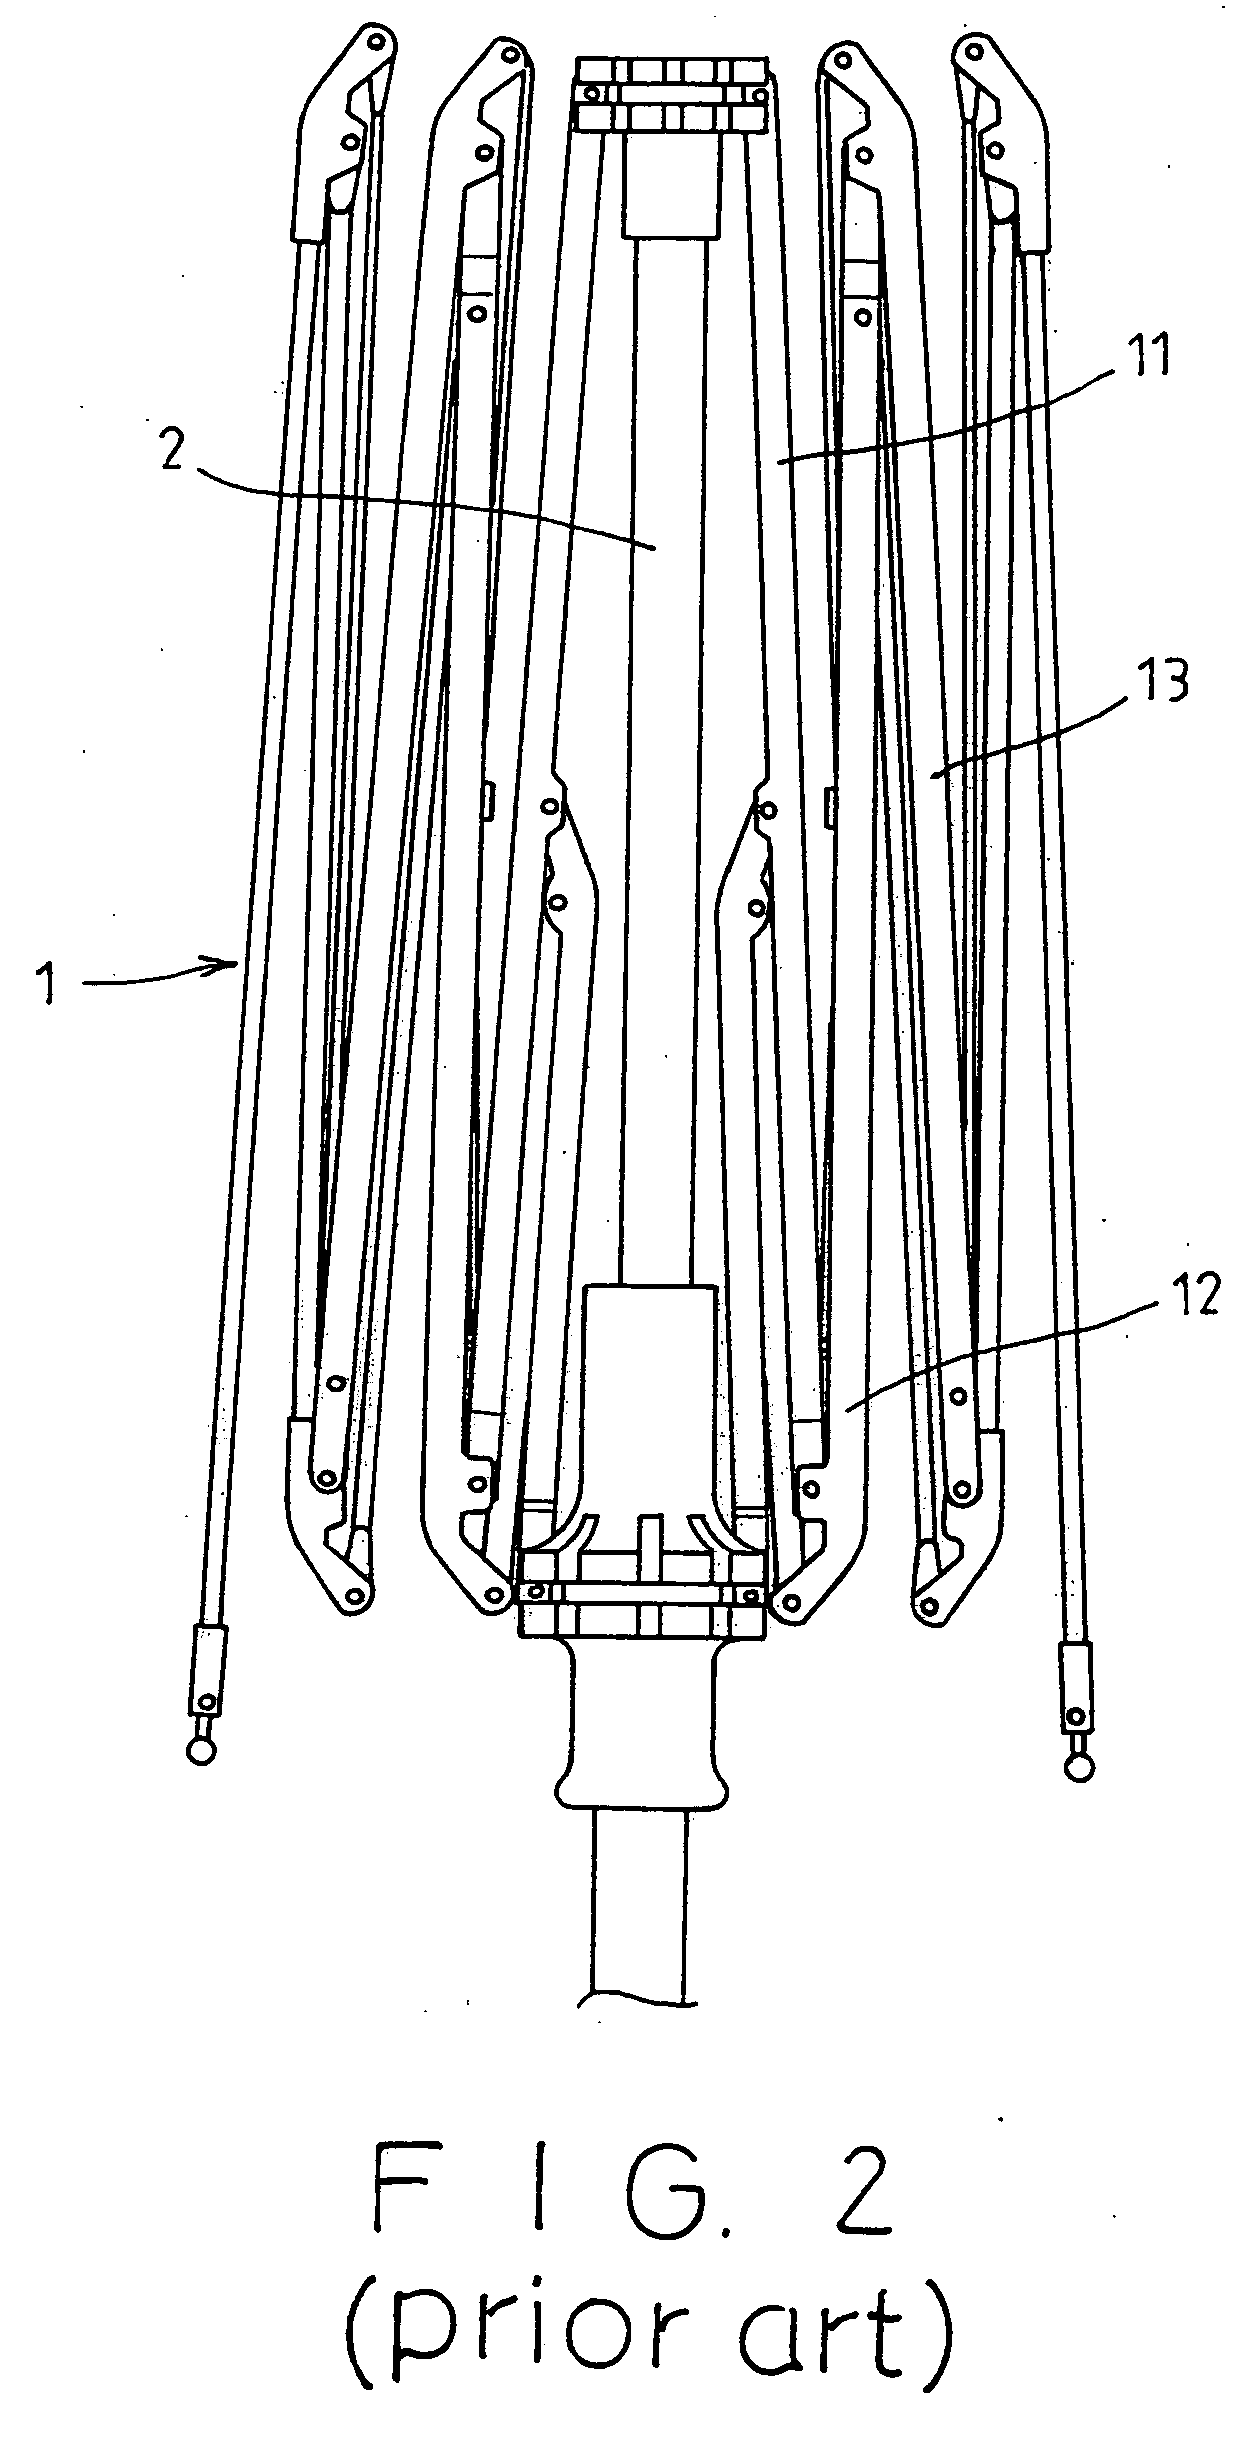 Foldable umbrella frame having five ribs (IV)